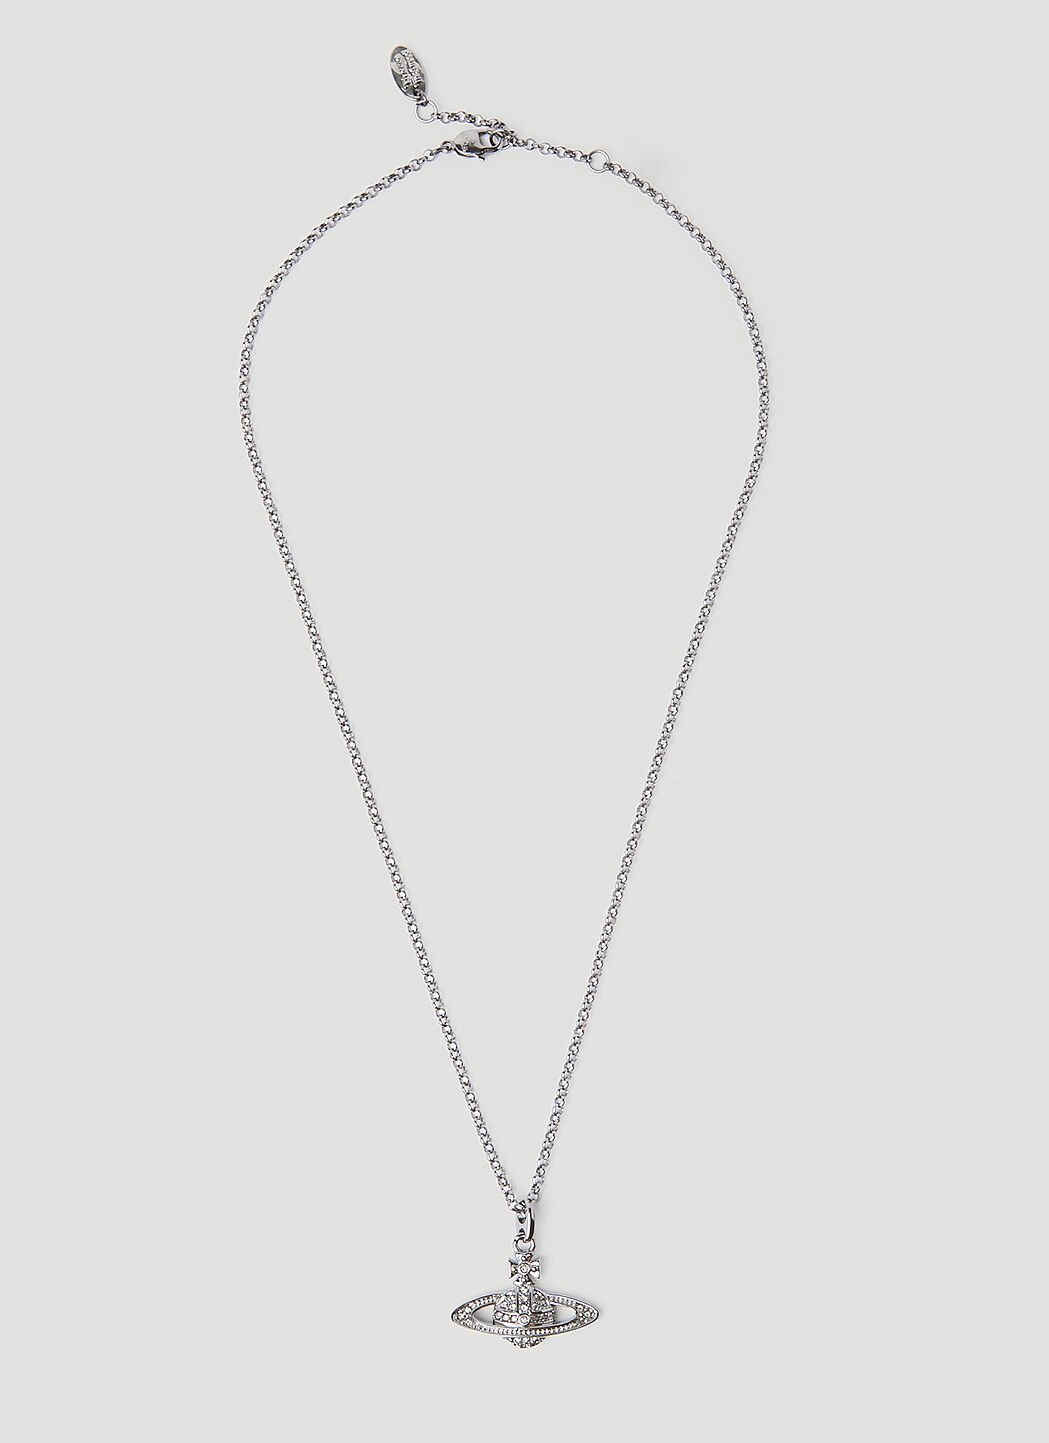 Vivienne Westwood MINI BAS RELIEF UNISEX - Necklace -  cream/silver-coloured/off-white - Zalando.de